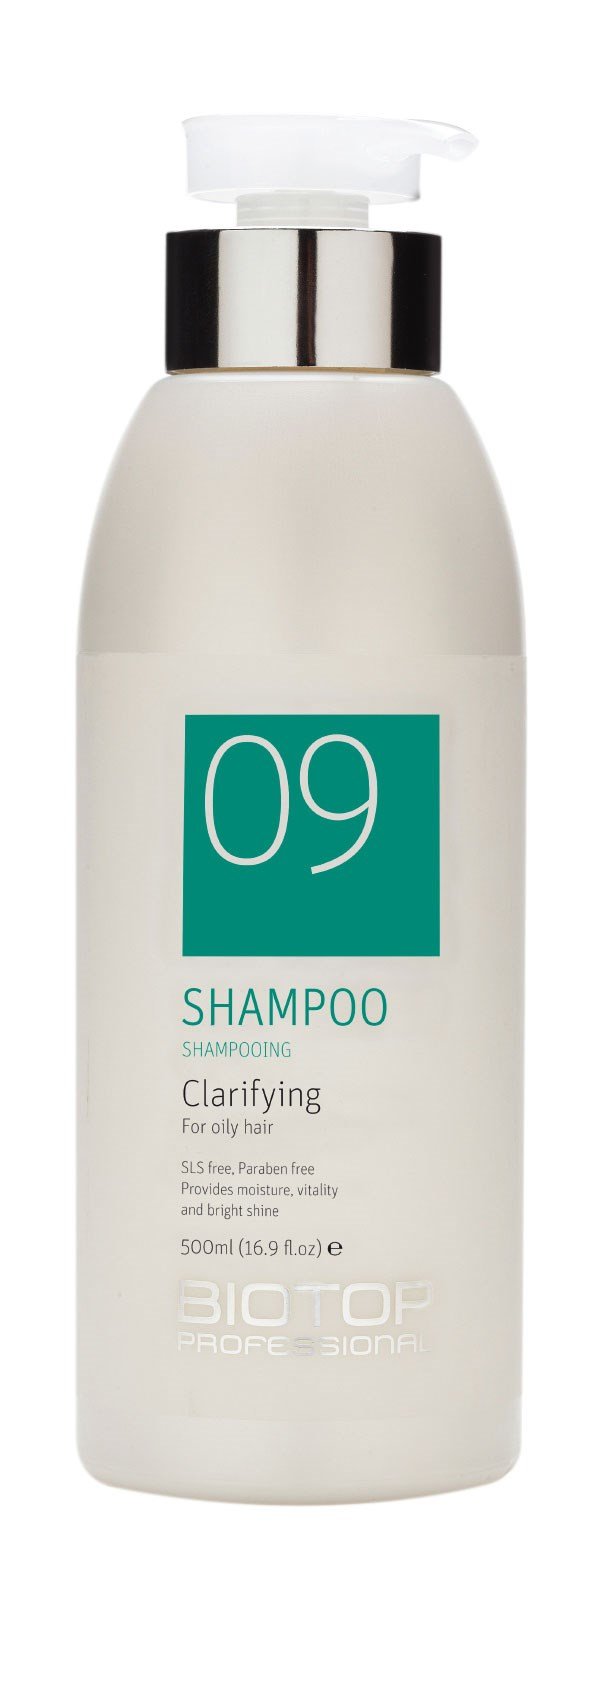 Biotop - 09 Clarifying Shampoo 500ml